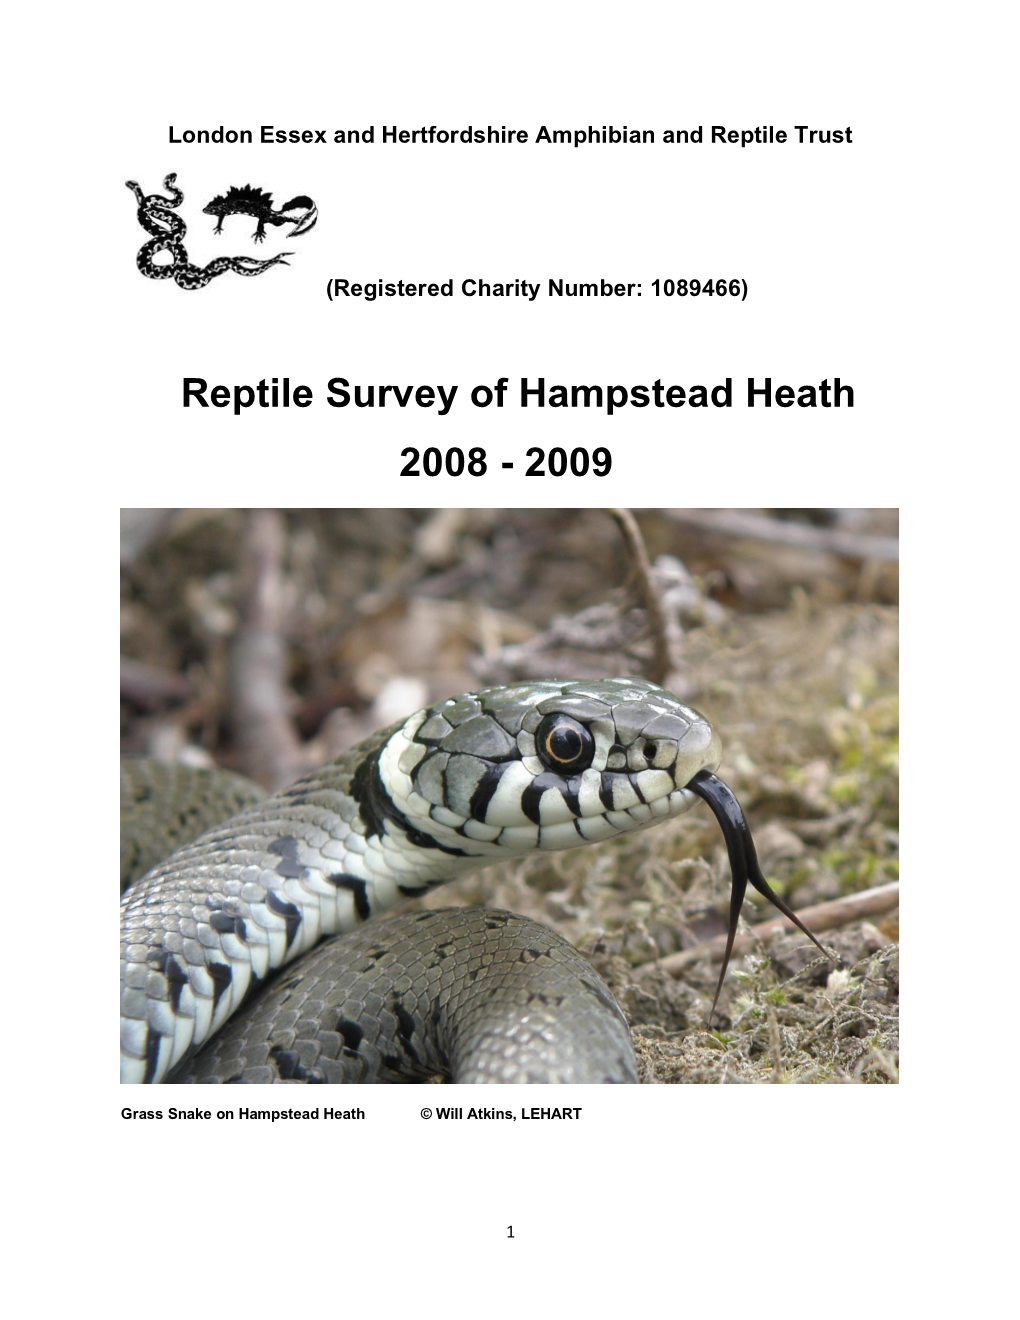 Reptile Survey of Hampstead Heath 2008